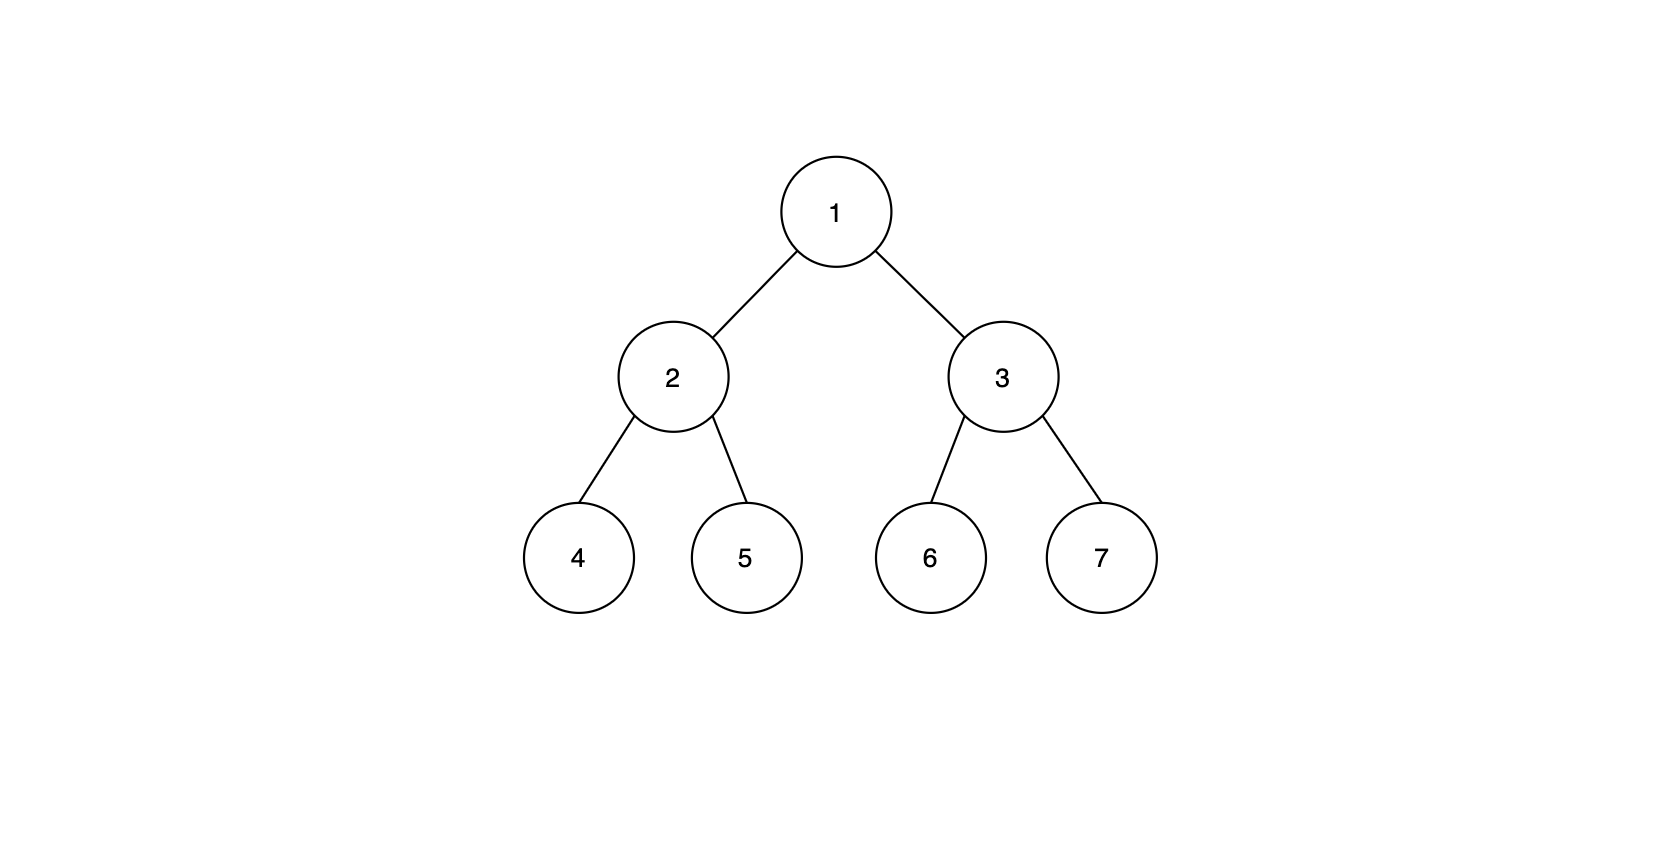 Binary Tree Problems